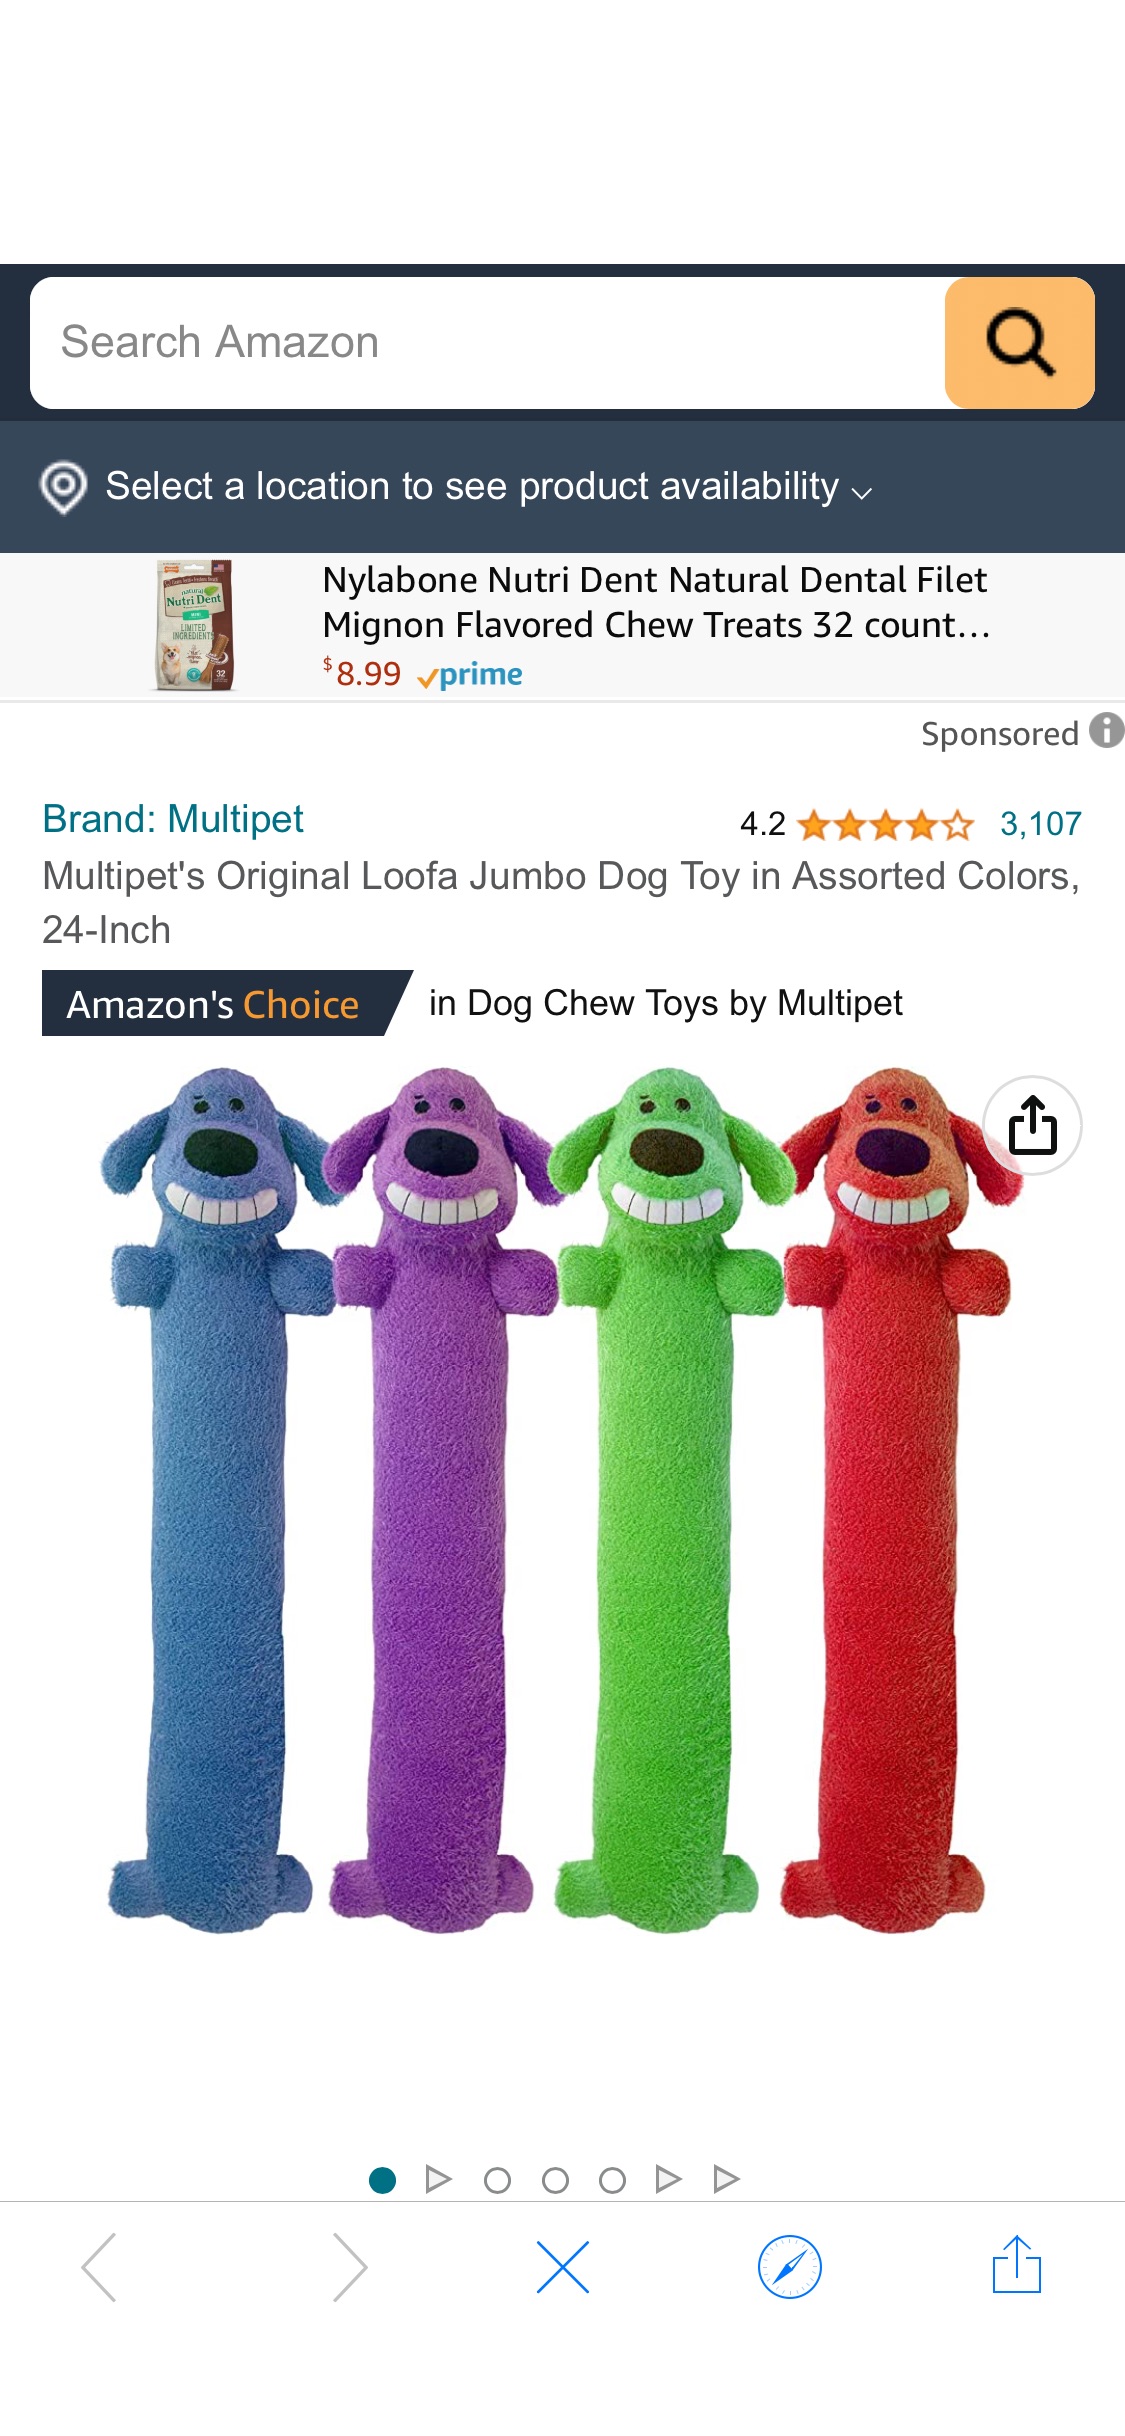 Pet Supplies : Pet Squeak Toys : Multipet's Original Loofa Jumbo Dog Toy in Assorted Colors, 24-Inch : Amazon.com